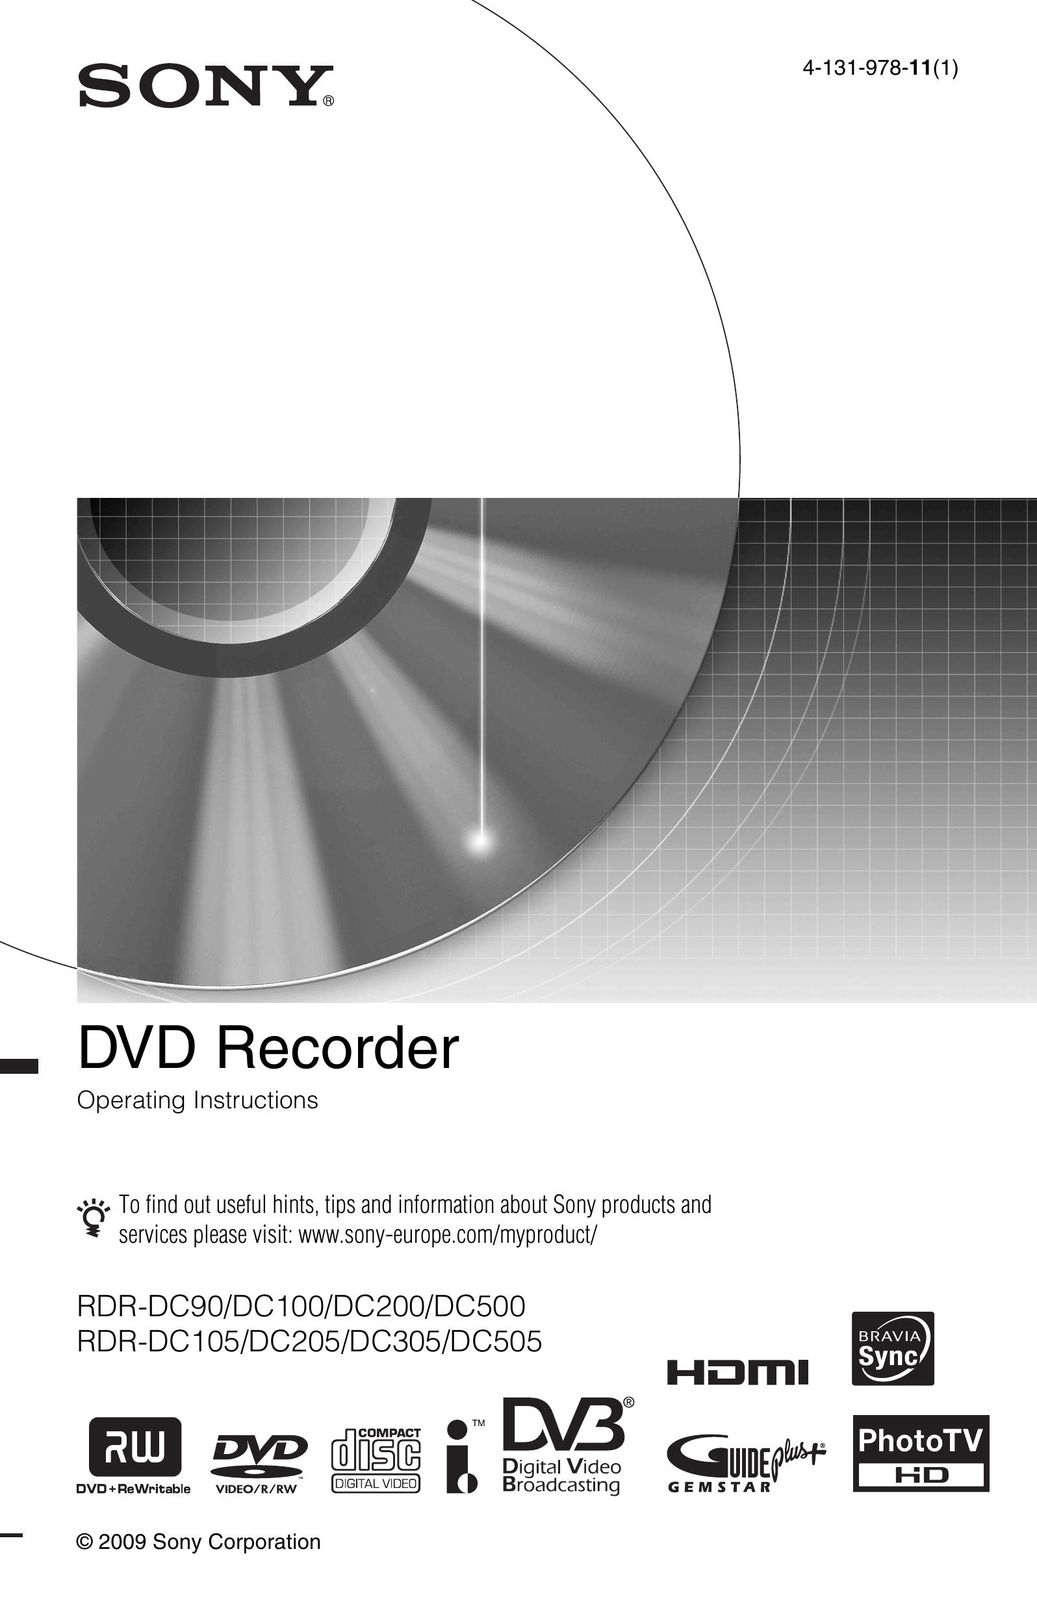 Sony RDR-DC305 DVD Recorder User Manual